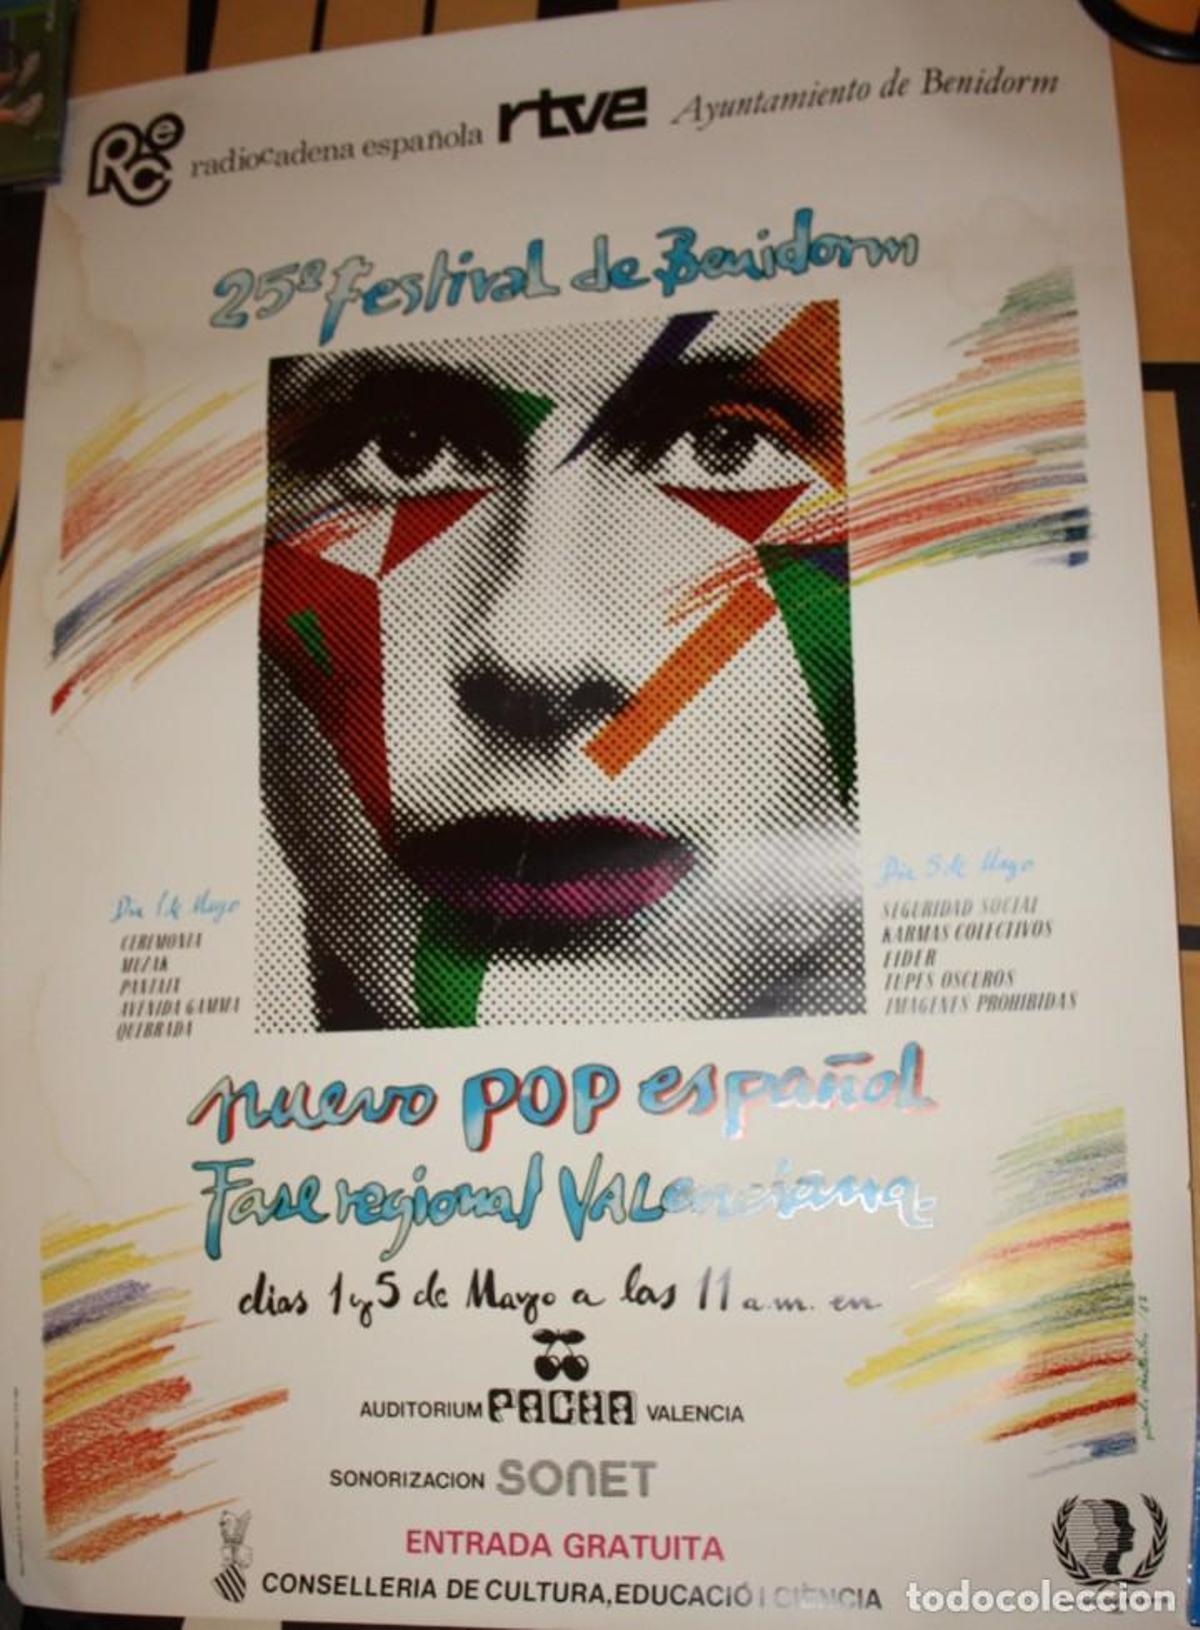 Cartel de la final valenciana del 25 Festival de Benidorm.